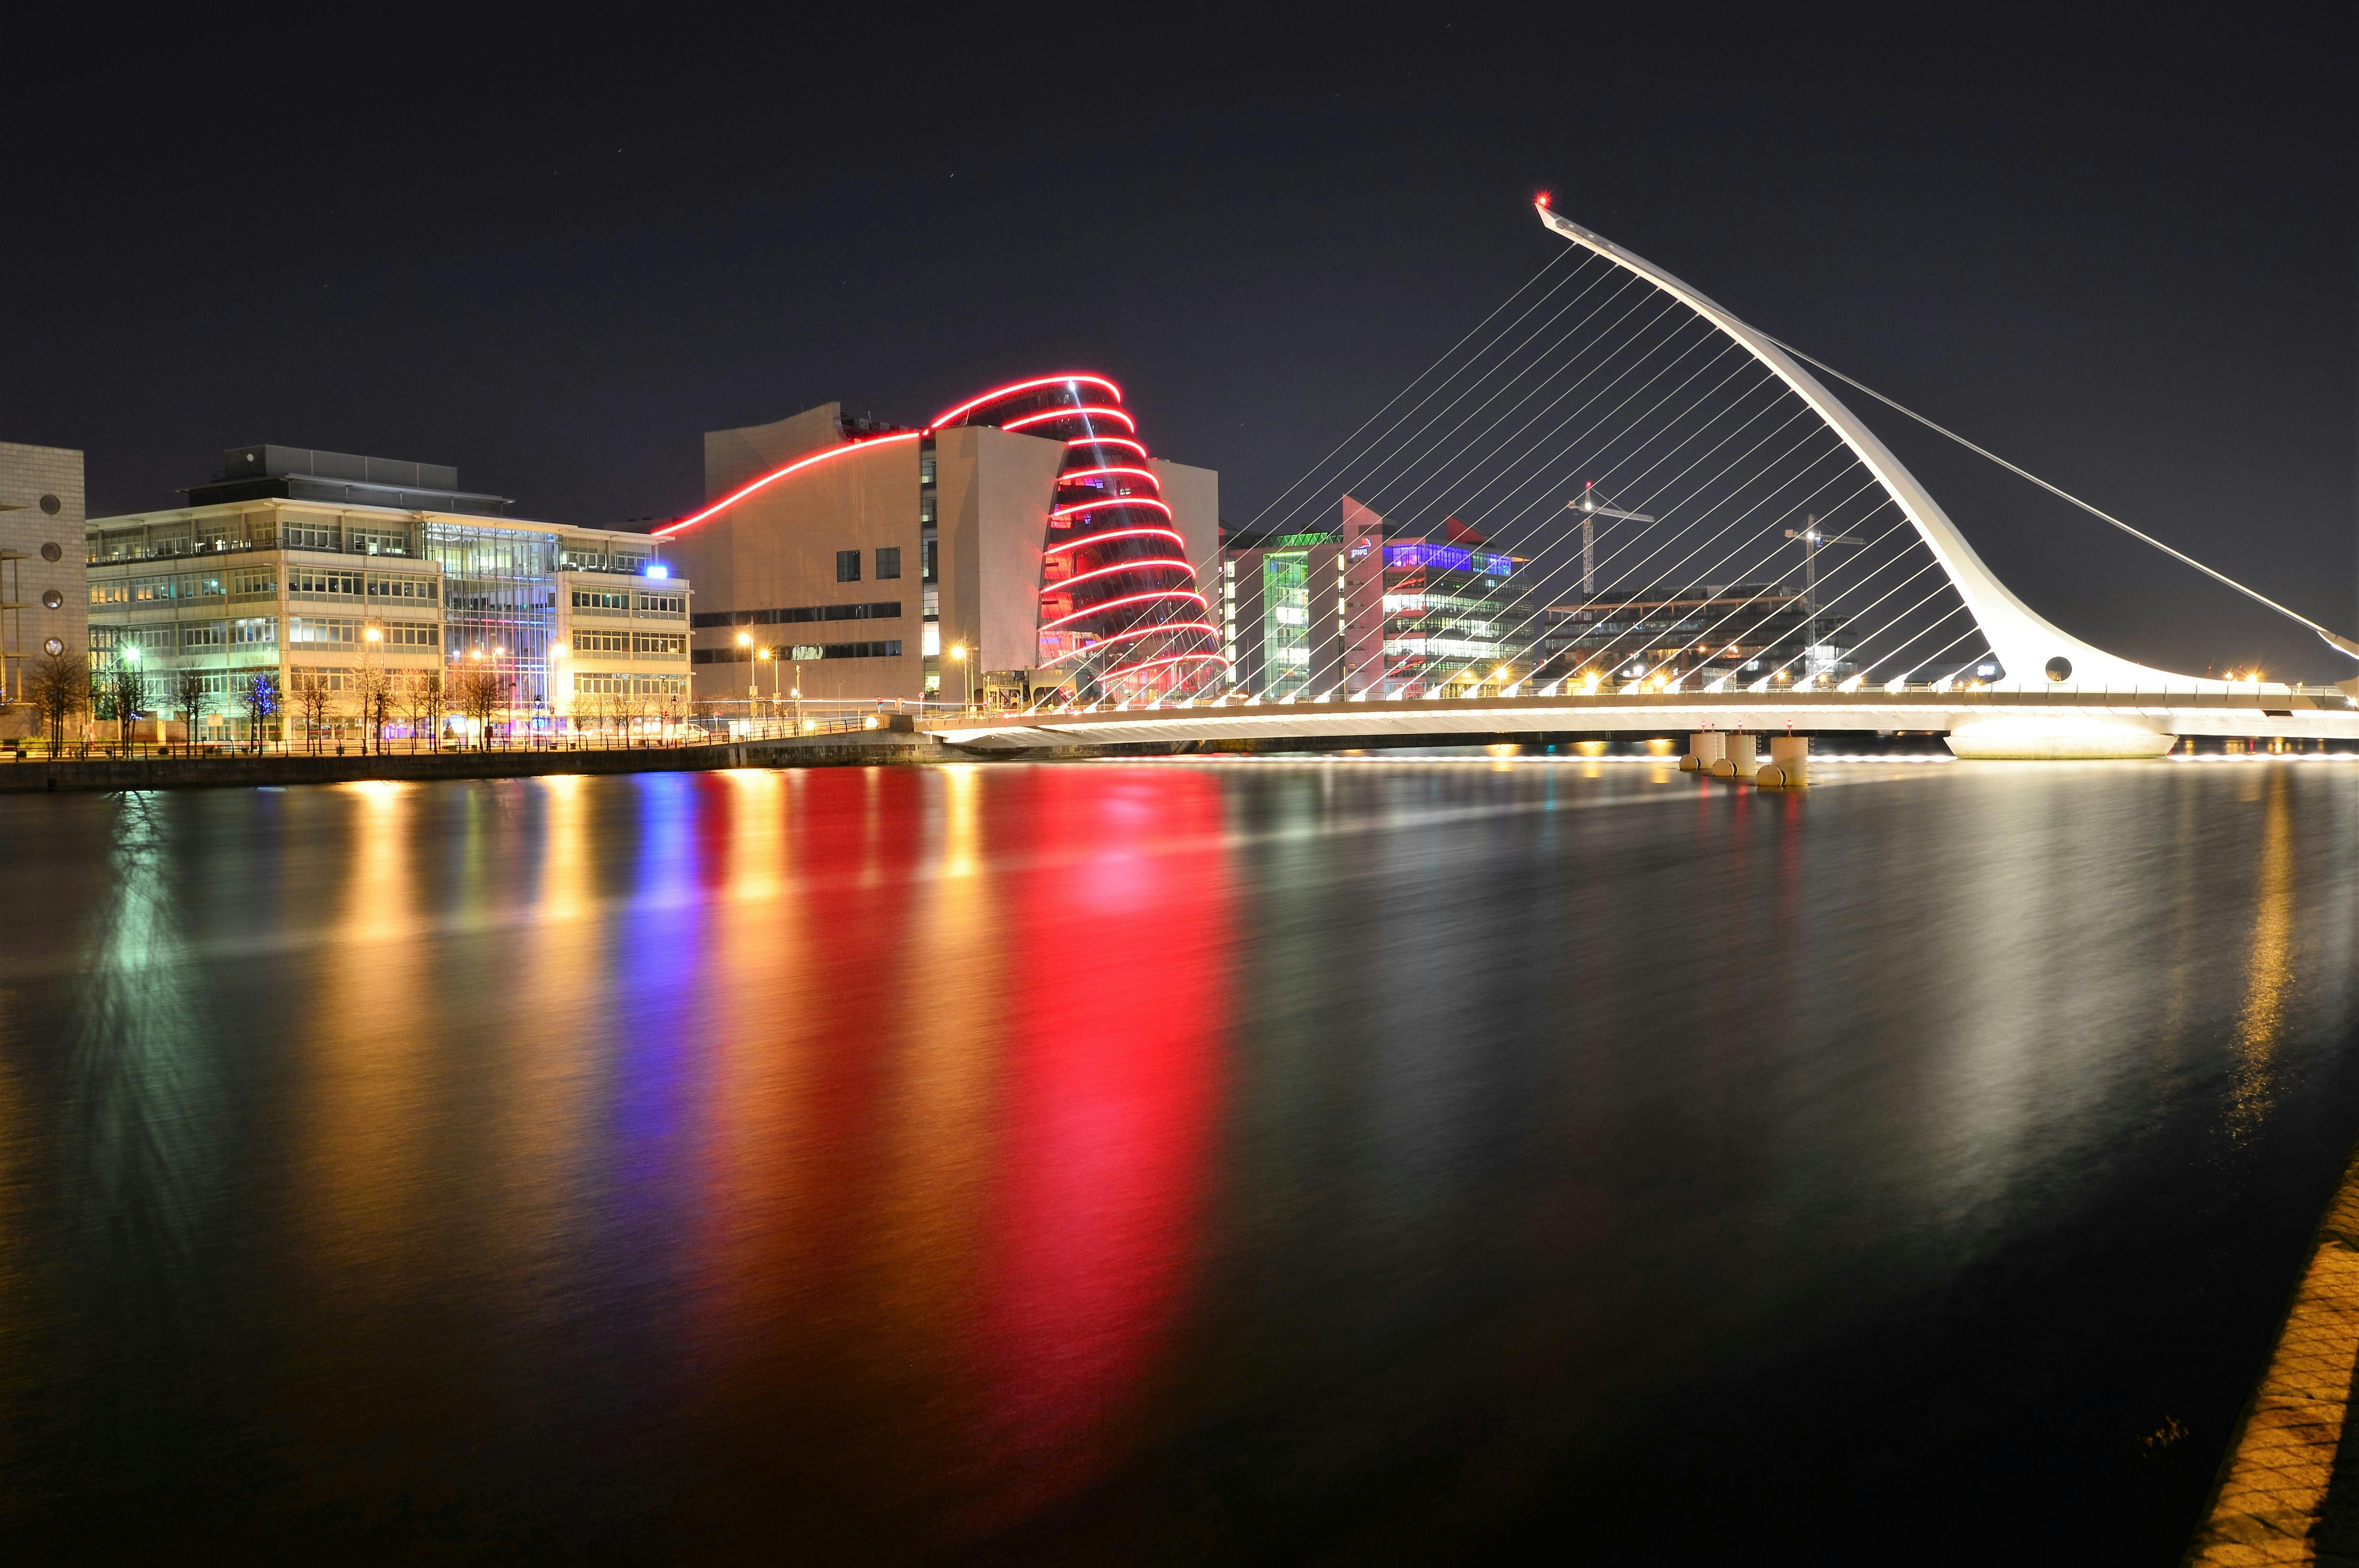 Best Time to Visit Ireland (Irishman's 2024 Guide)